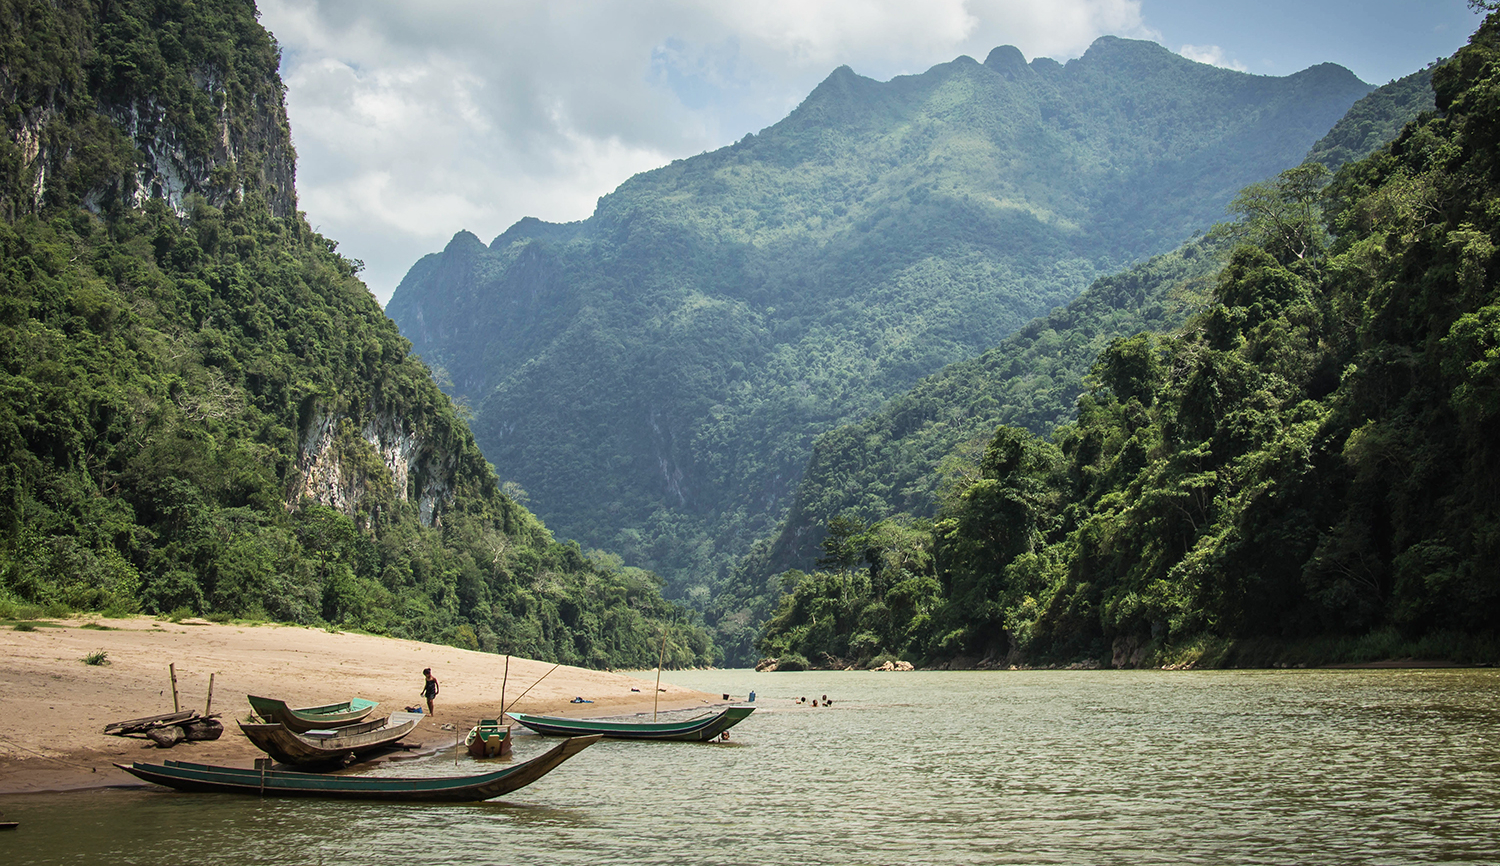 What Is The Longest Mountain Range in Vietnam?